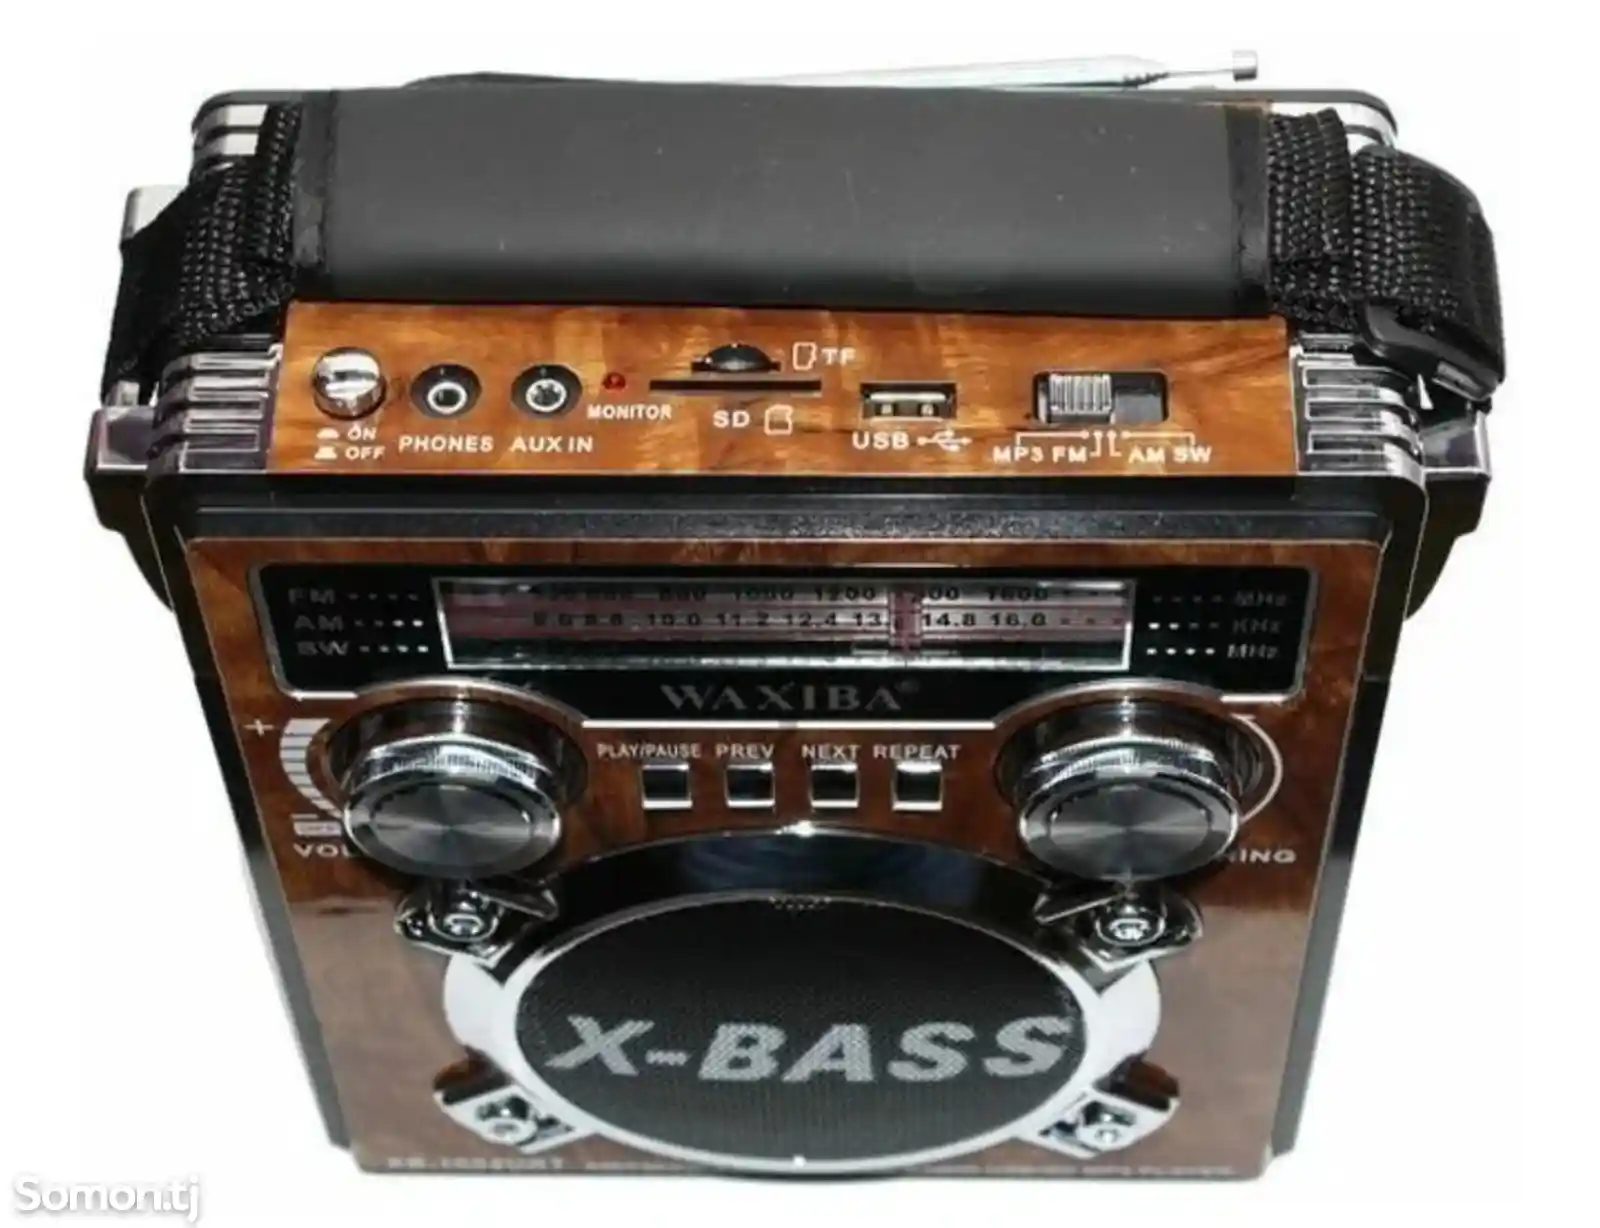 РадиоприемникWaxibaXB-1054-4